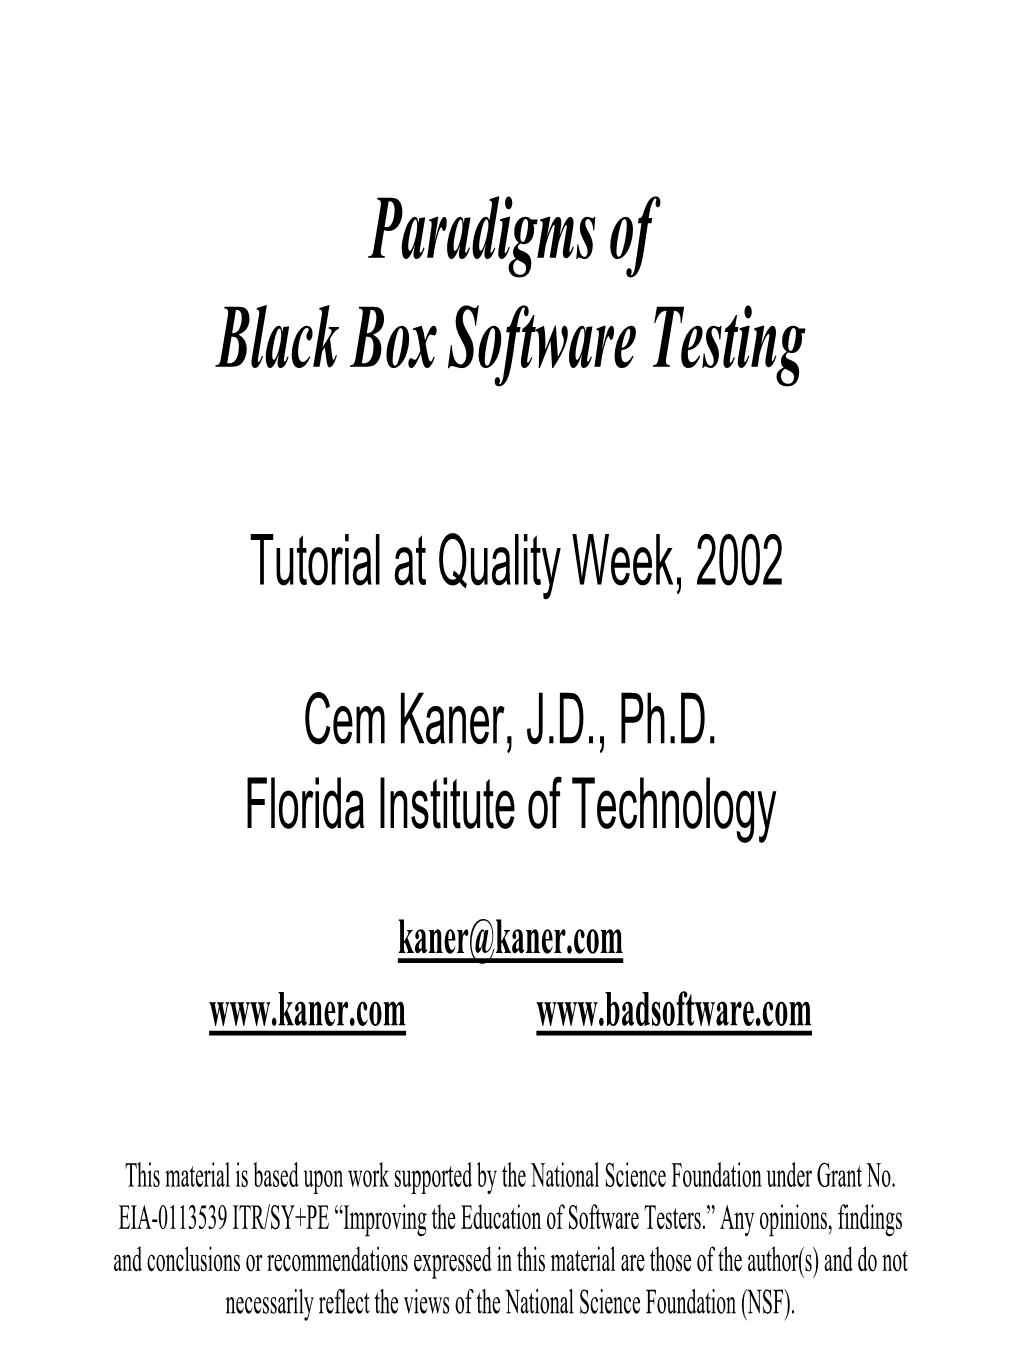 Paradigms of Black Box Software Testing